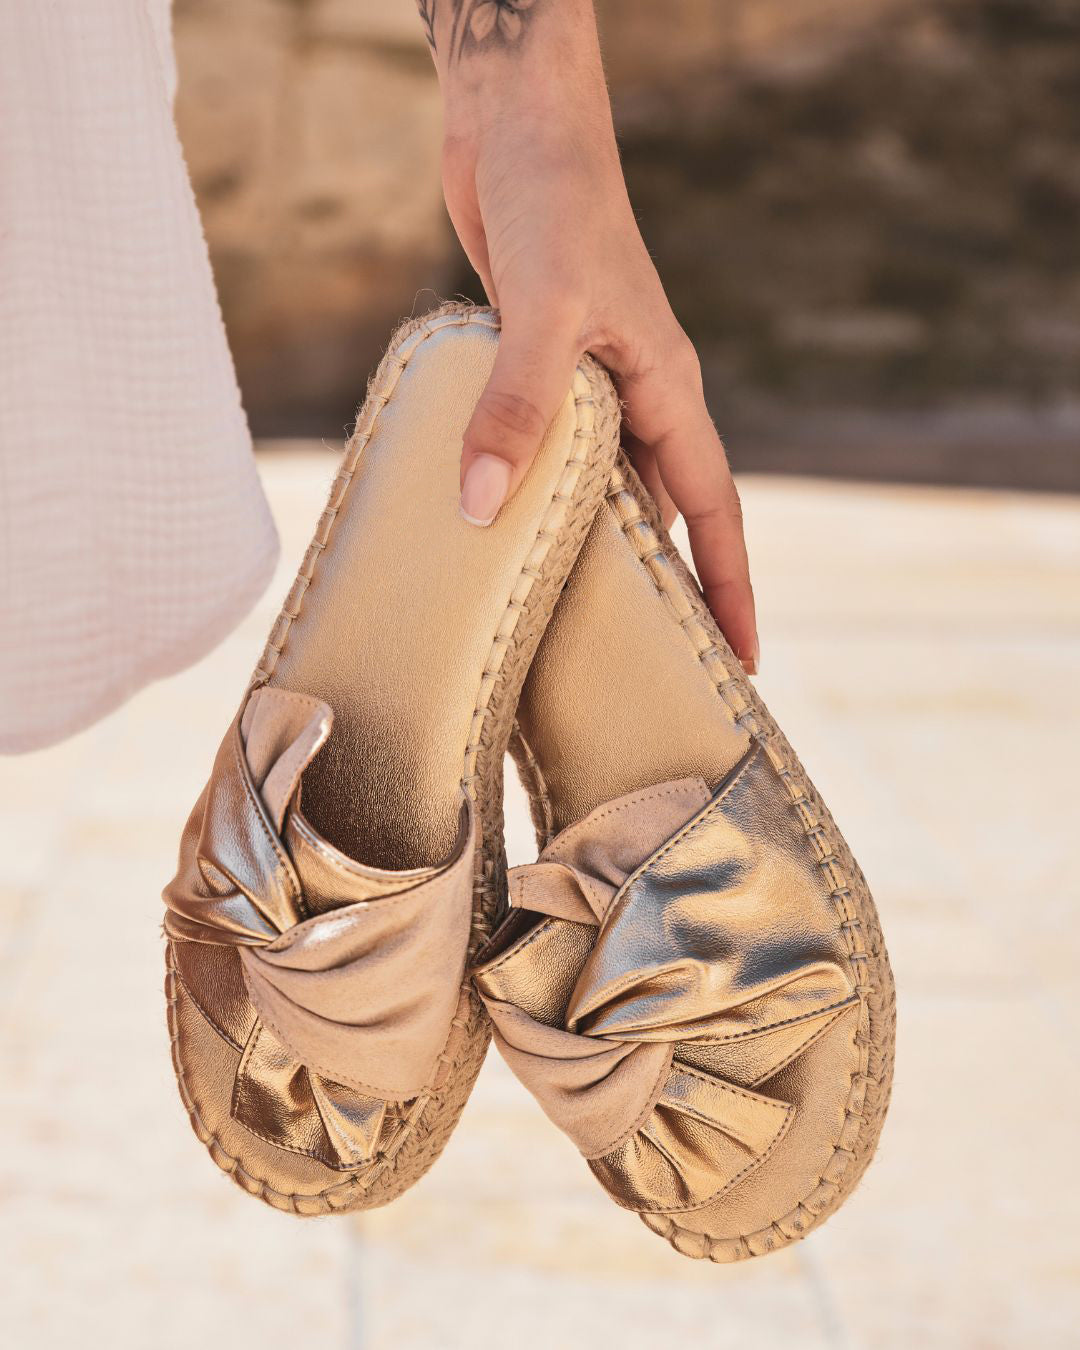 Sandale femme plateforme confort beige et doré - Pénélope